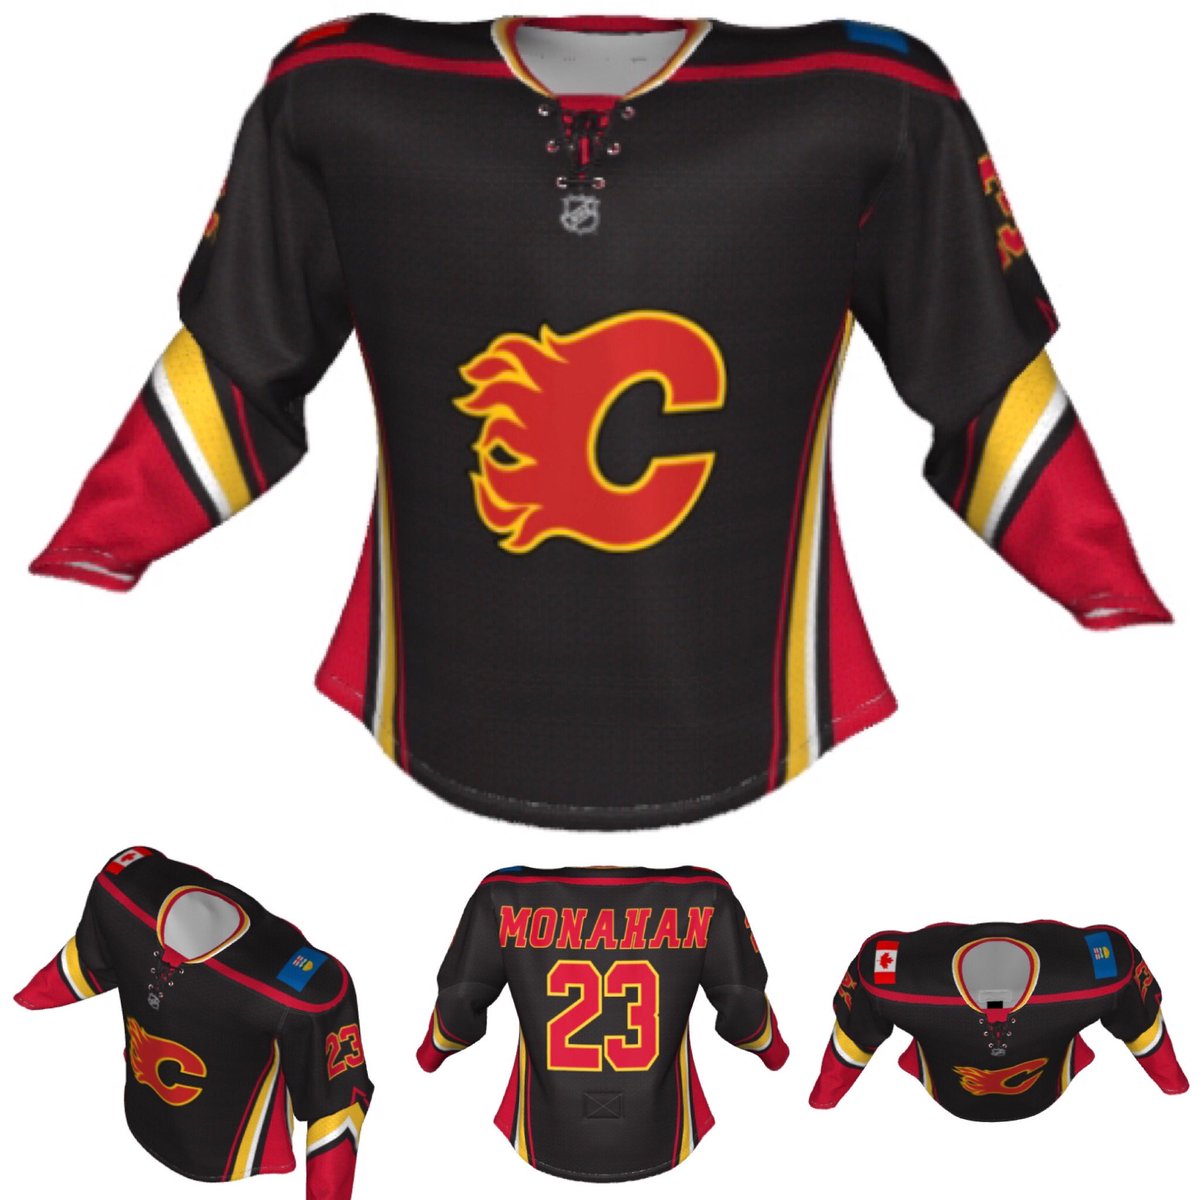 Men's Fanatics Branded Jacob Markstrom Red Calgary Flames Breakaway Player  Jersey